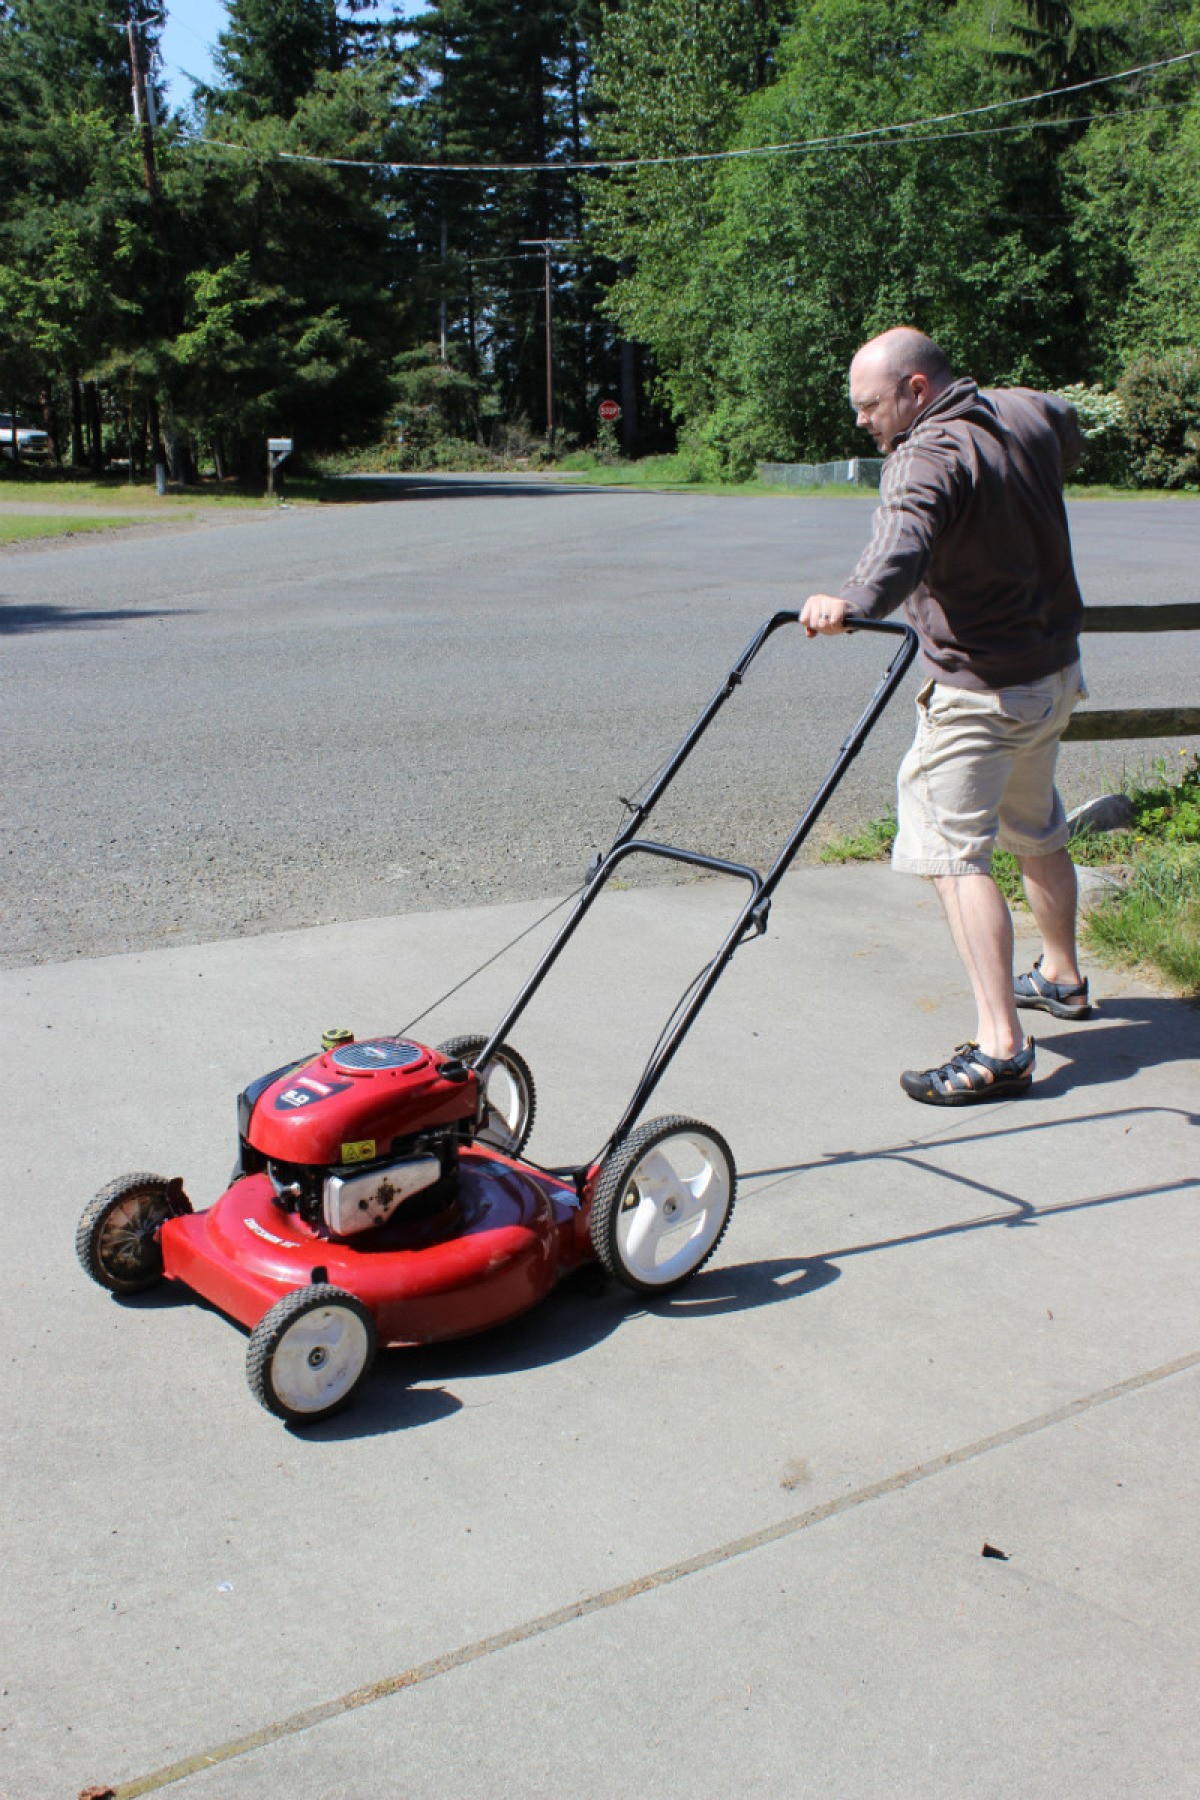 Fixing a Lawn Mower That Won't Start | ThriftyFun Lawn Mower Ran Out Of Gas And Won't Start